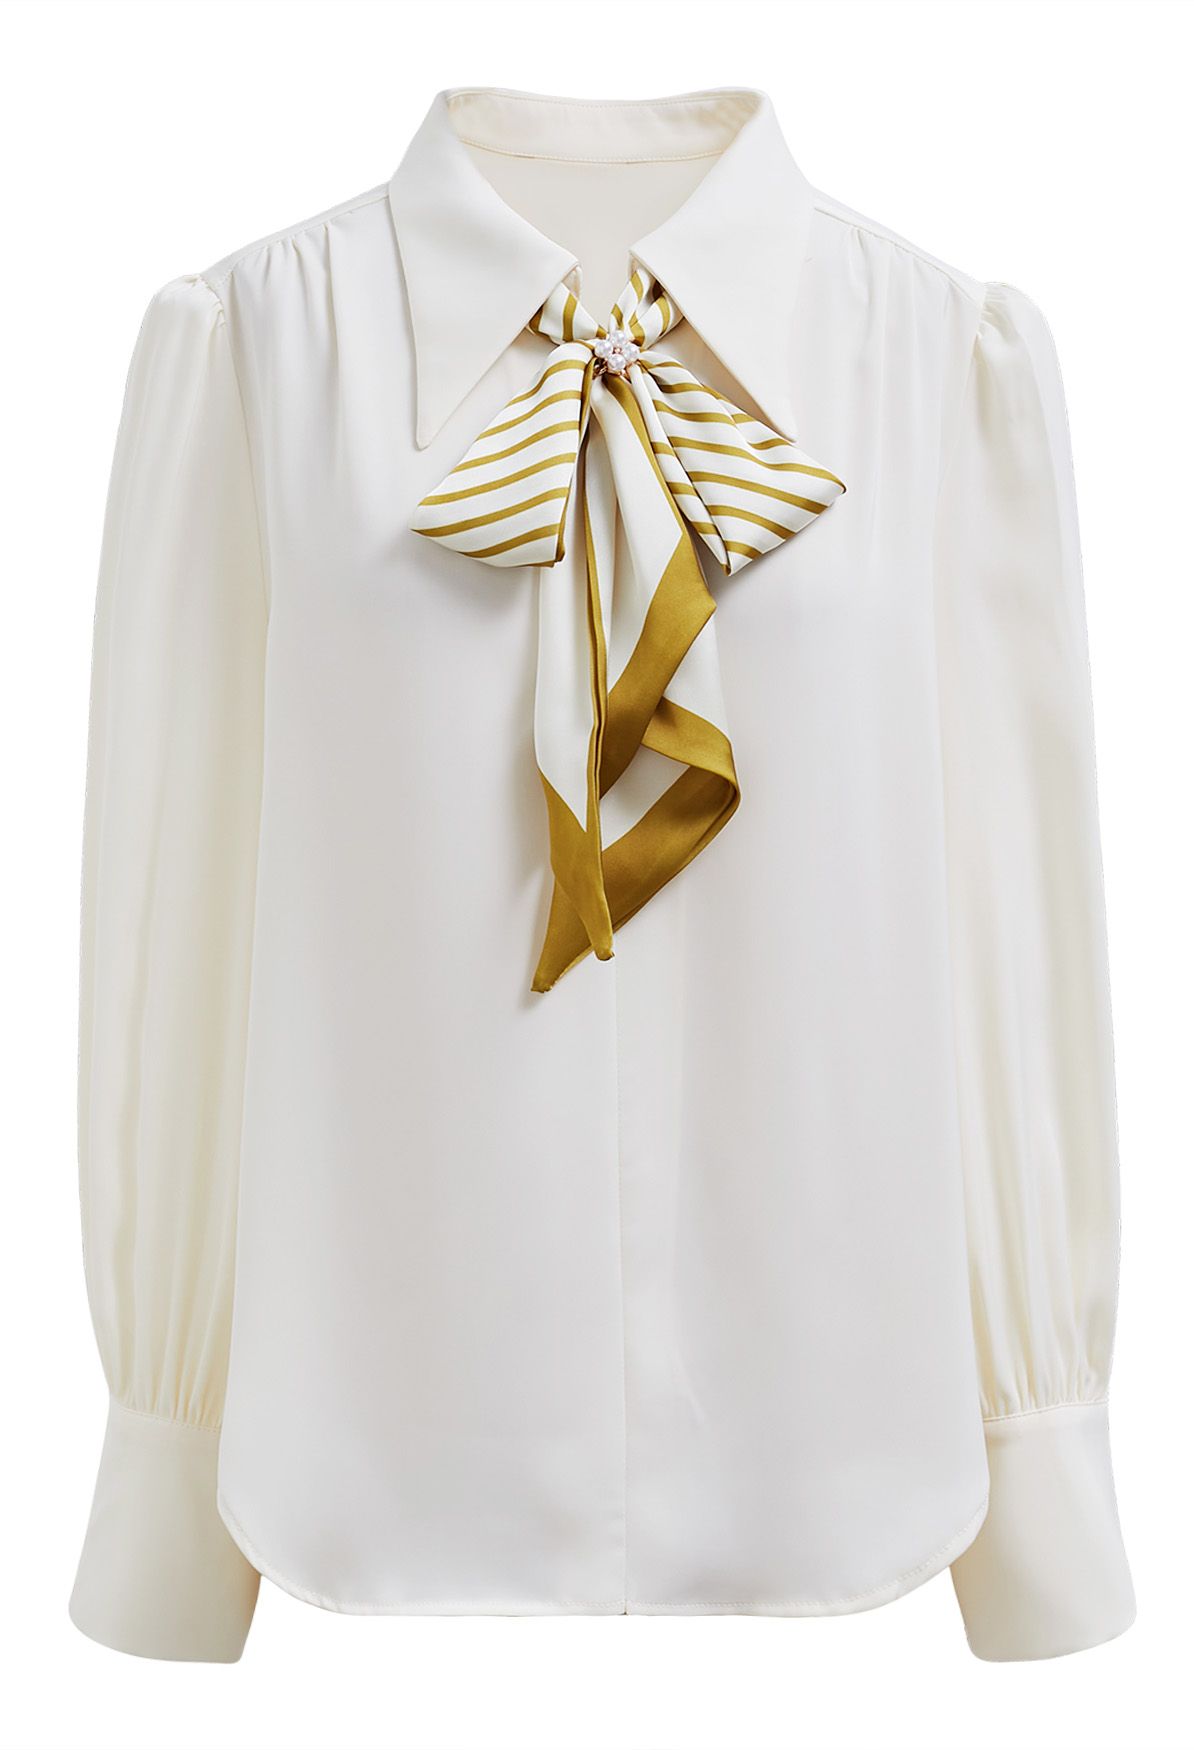 Vogue Detachable Bowknot Satin Shirt in Cream